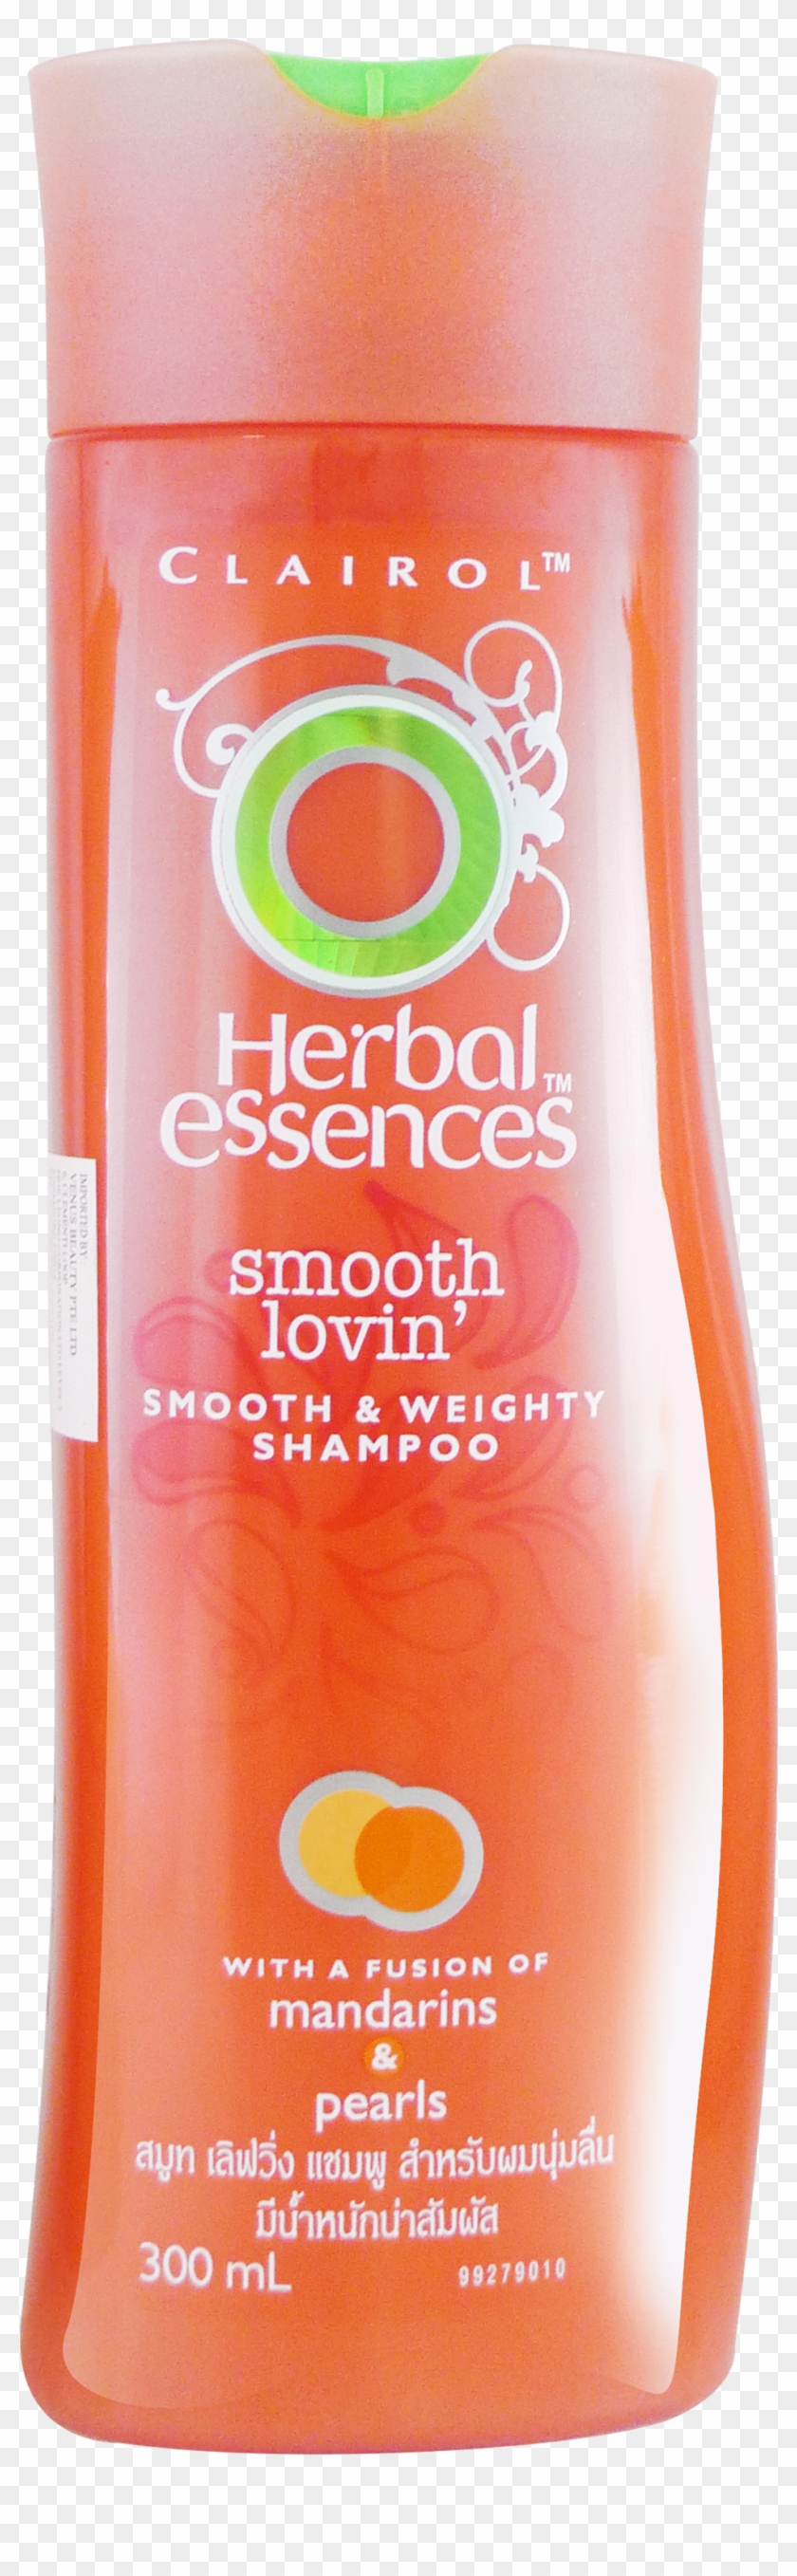 Clairol Herbal Essences Shampoo 300ml Smooth Lovin' - Herbal Essences Shampoo Png #1629659